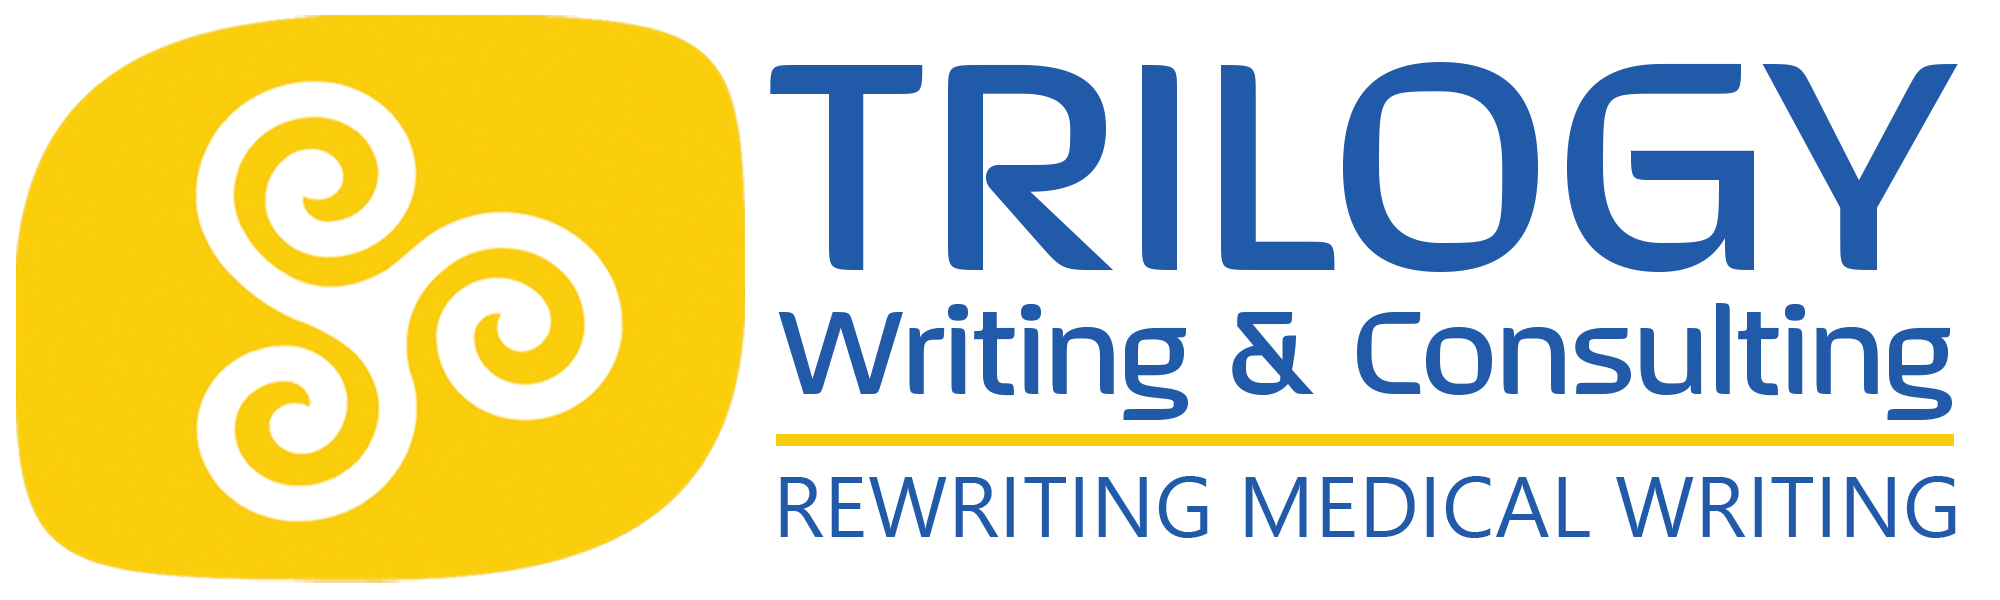 trilogy-new-logo